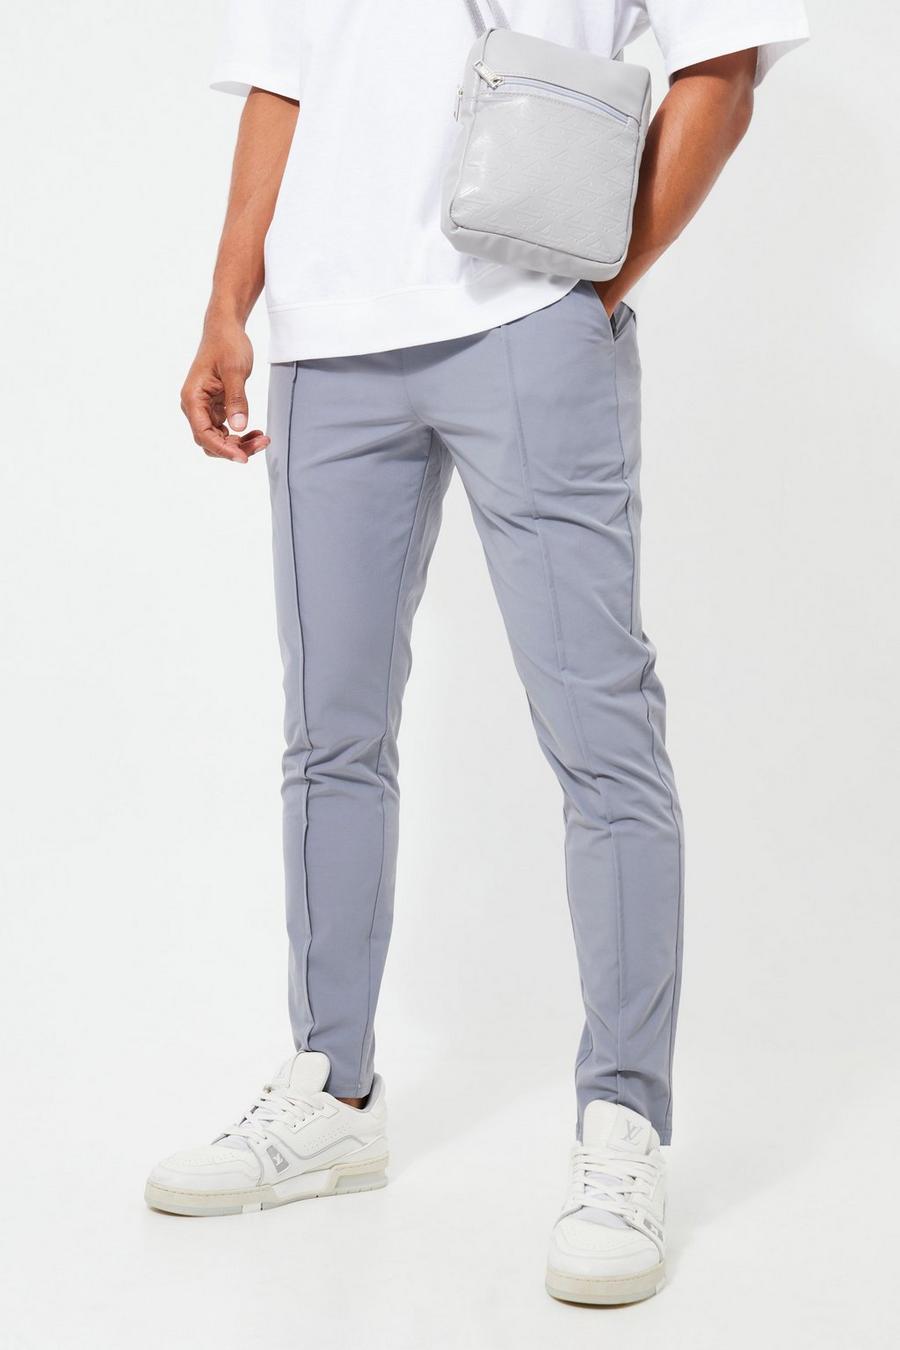 Pantaloni Stretch Skinny Fit leggeri con nervature, Light grey